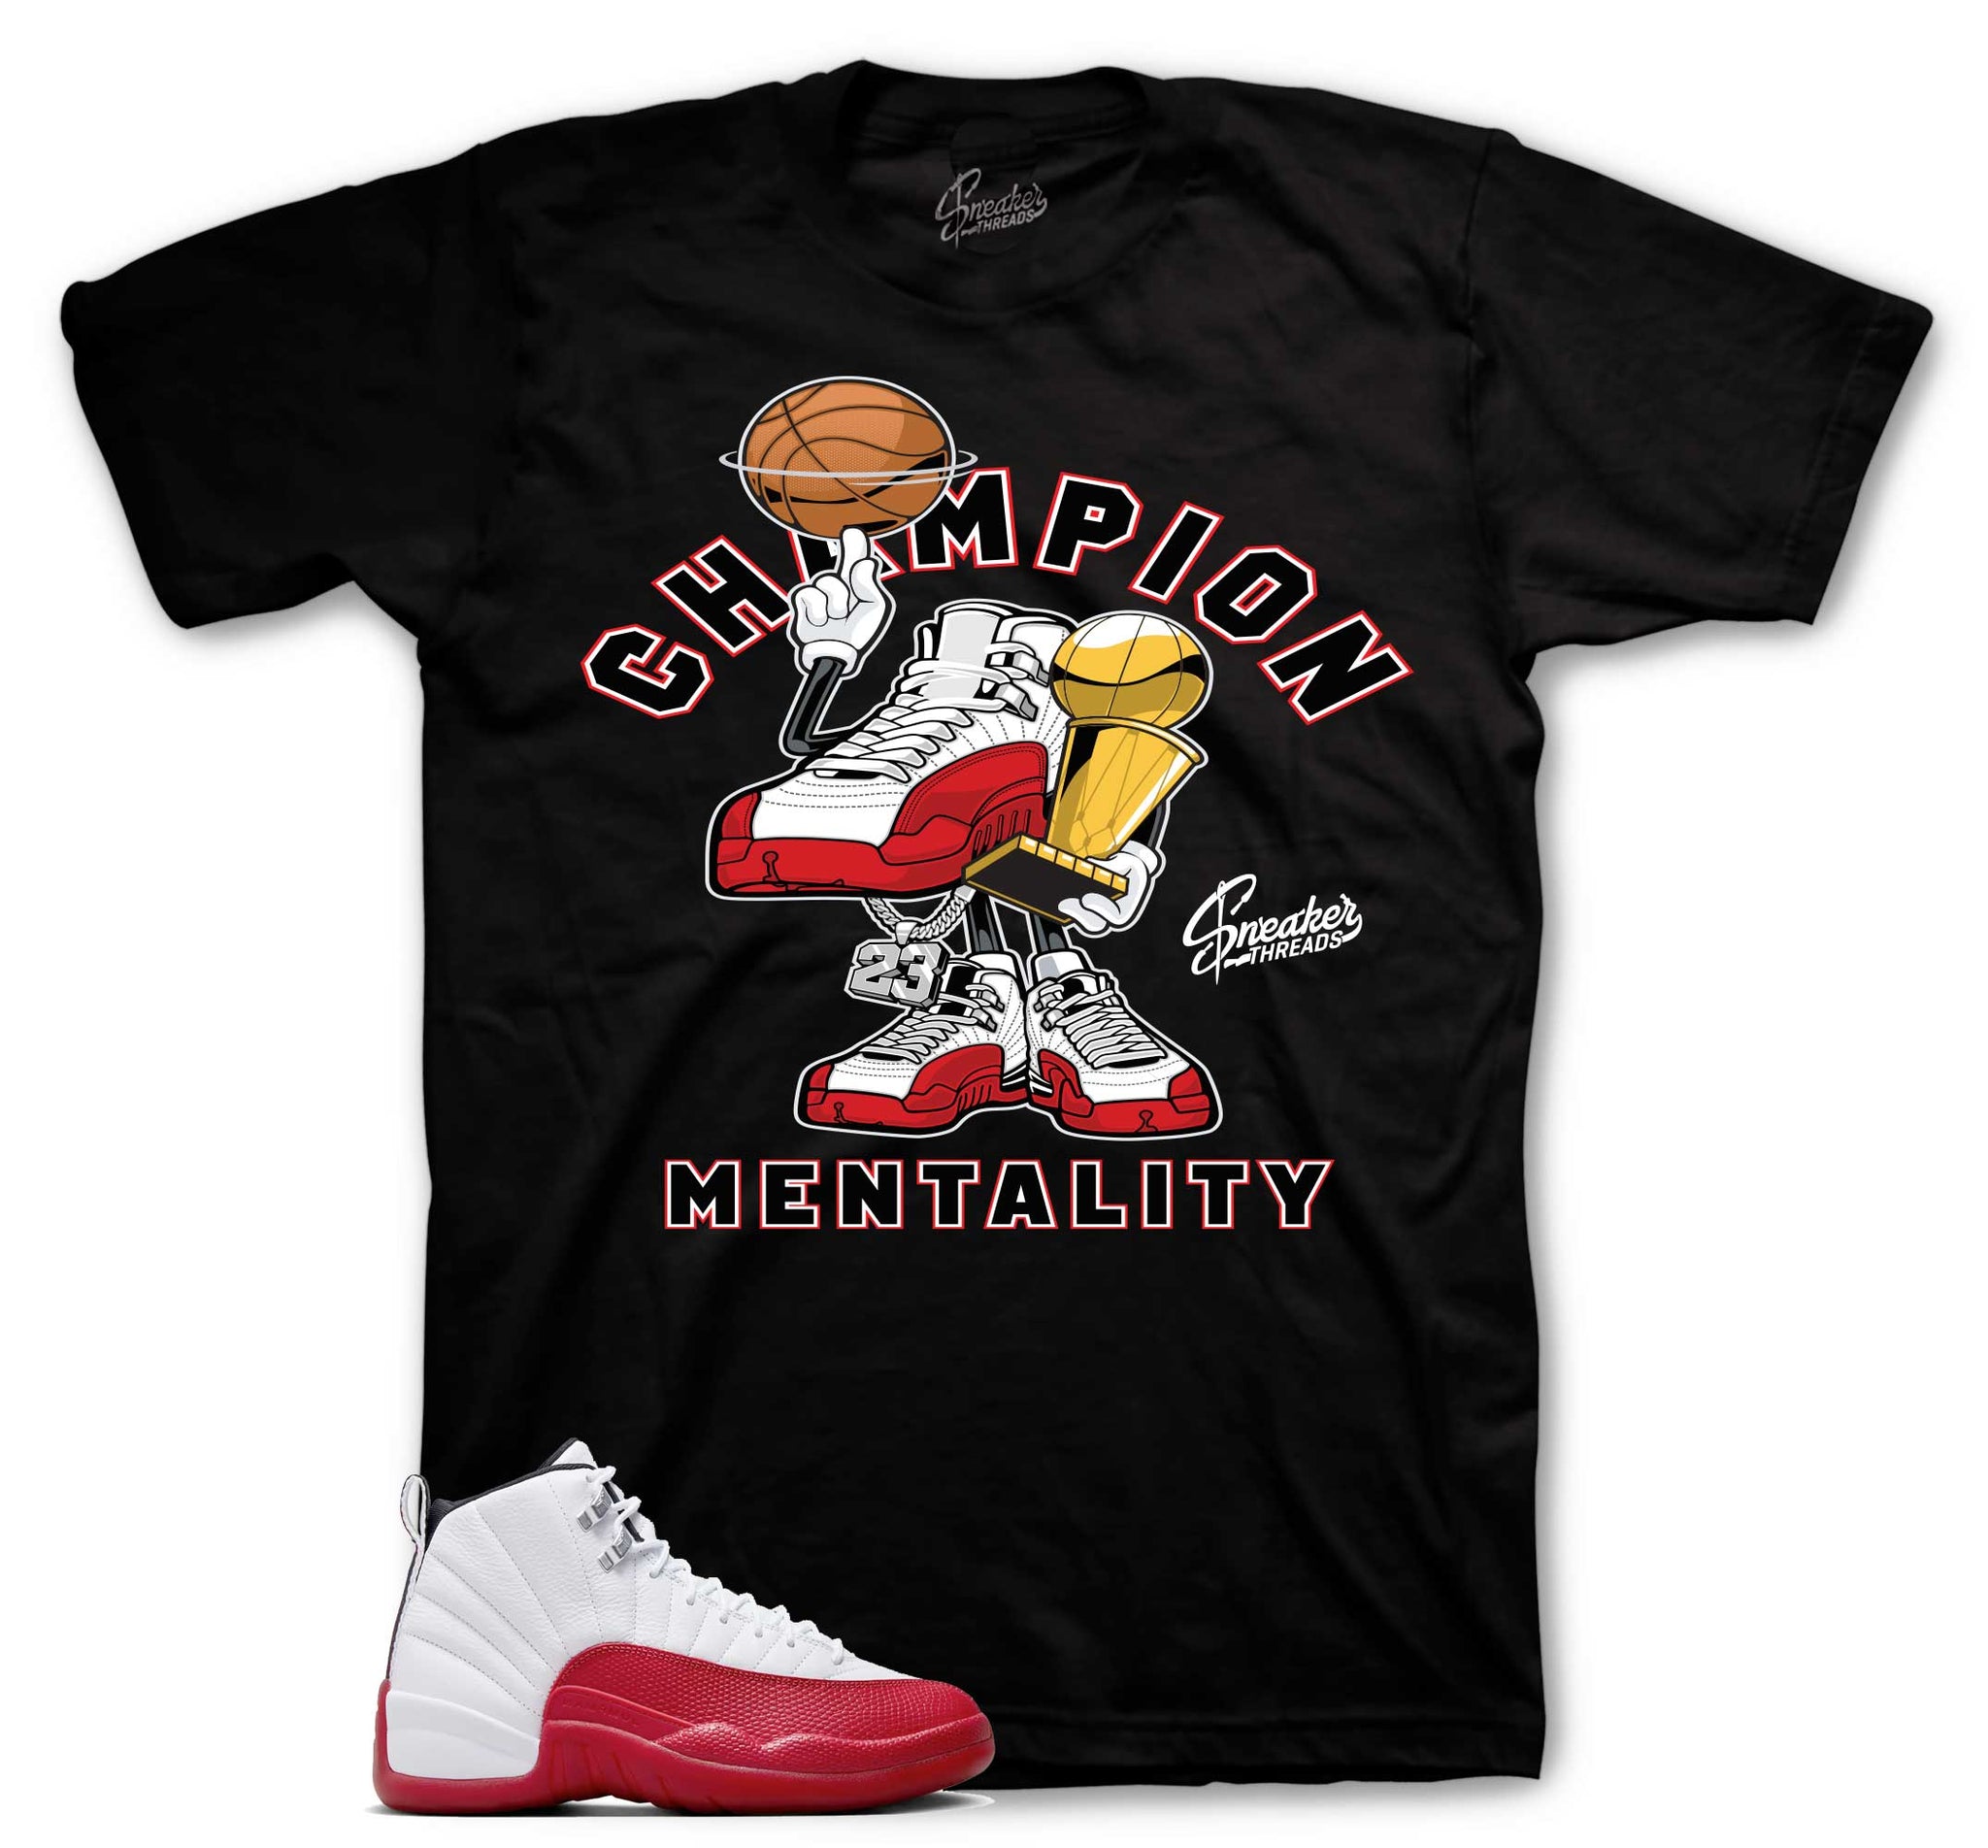 Retro 12 Cherry Shirt - Champ Mentality - Black